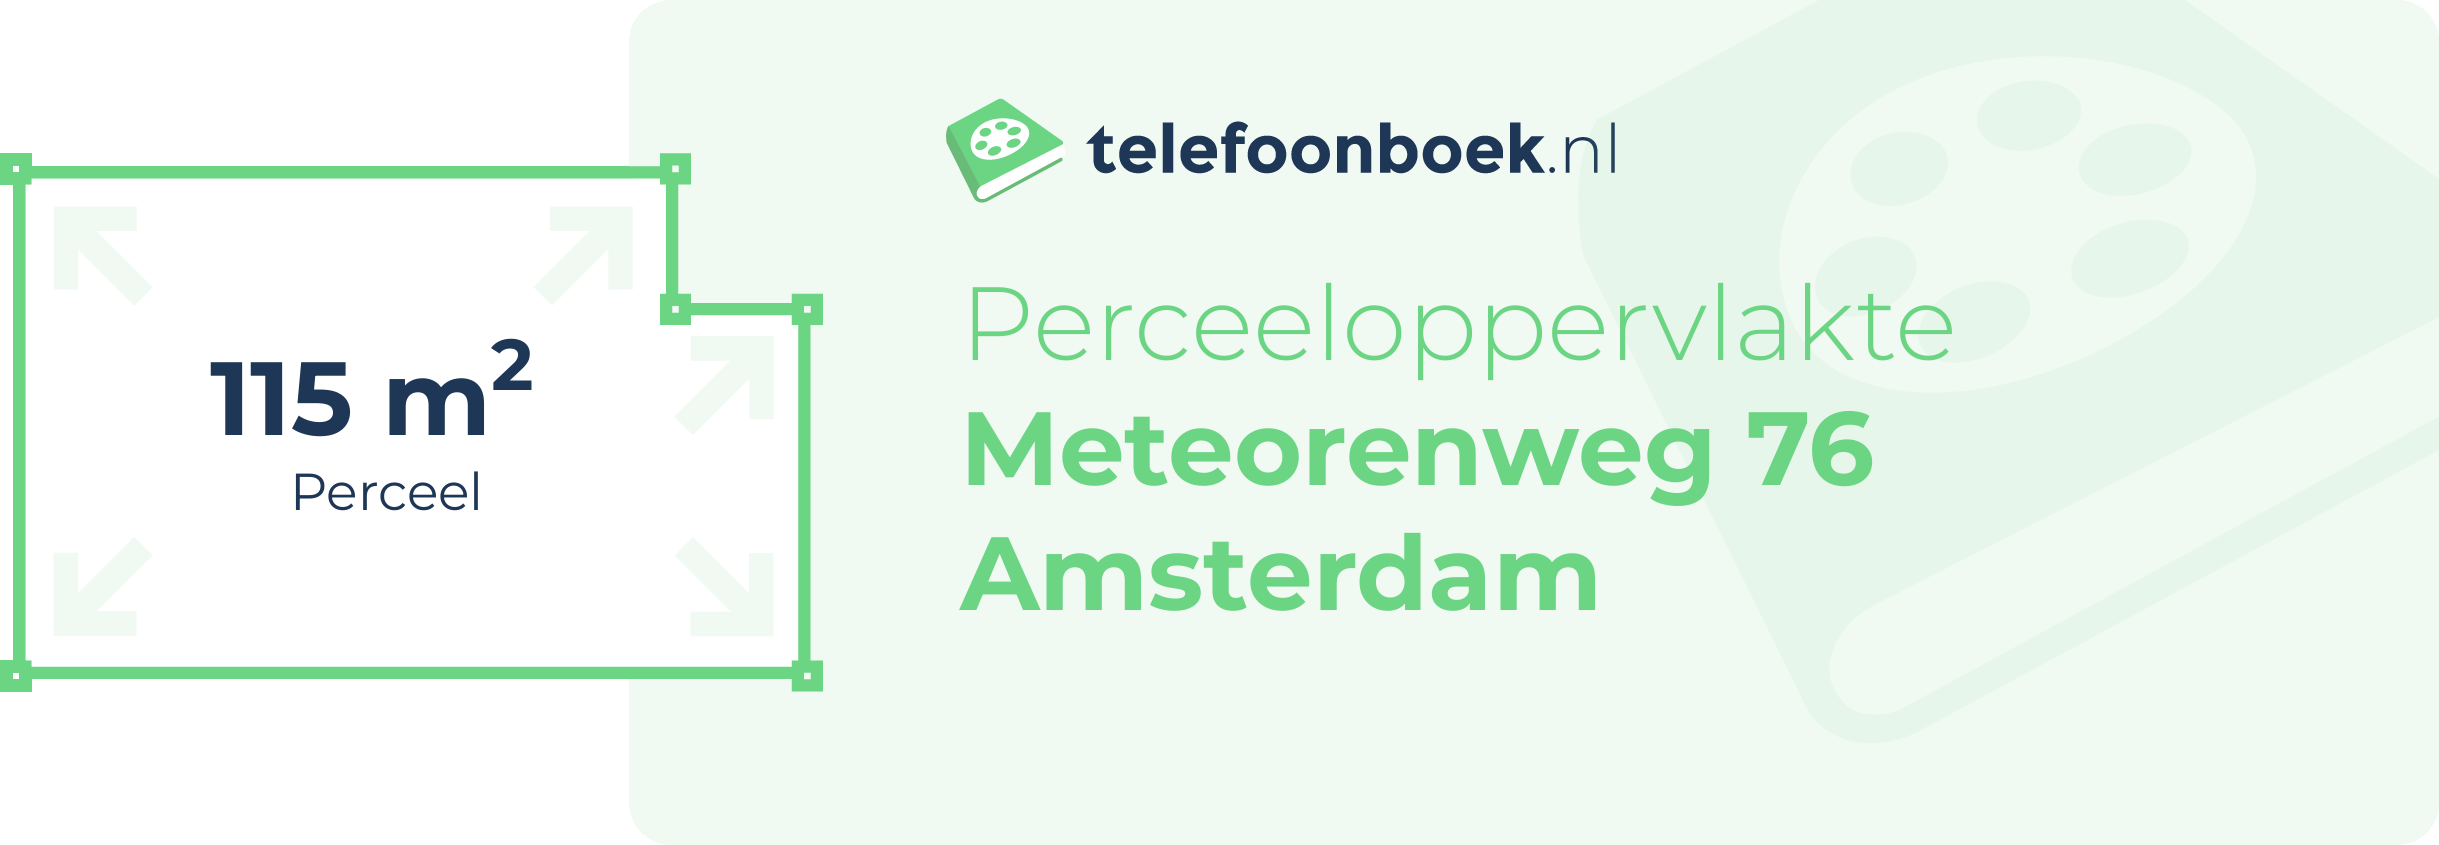 Perceeloppervlakte Meteorenweg 76 Amsterdam